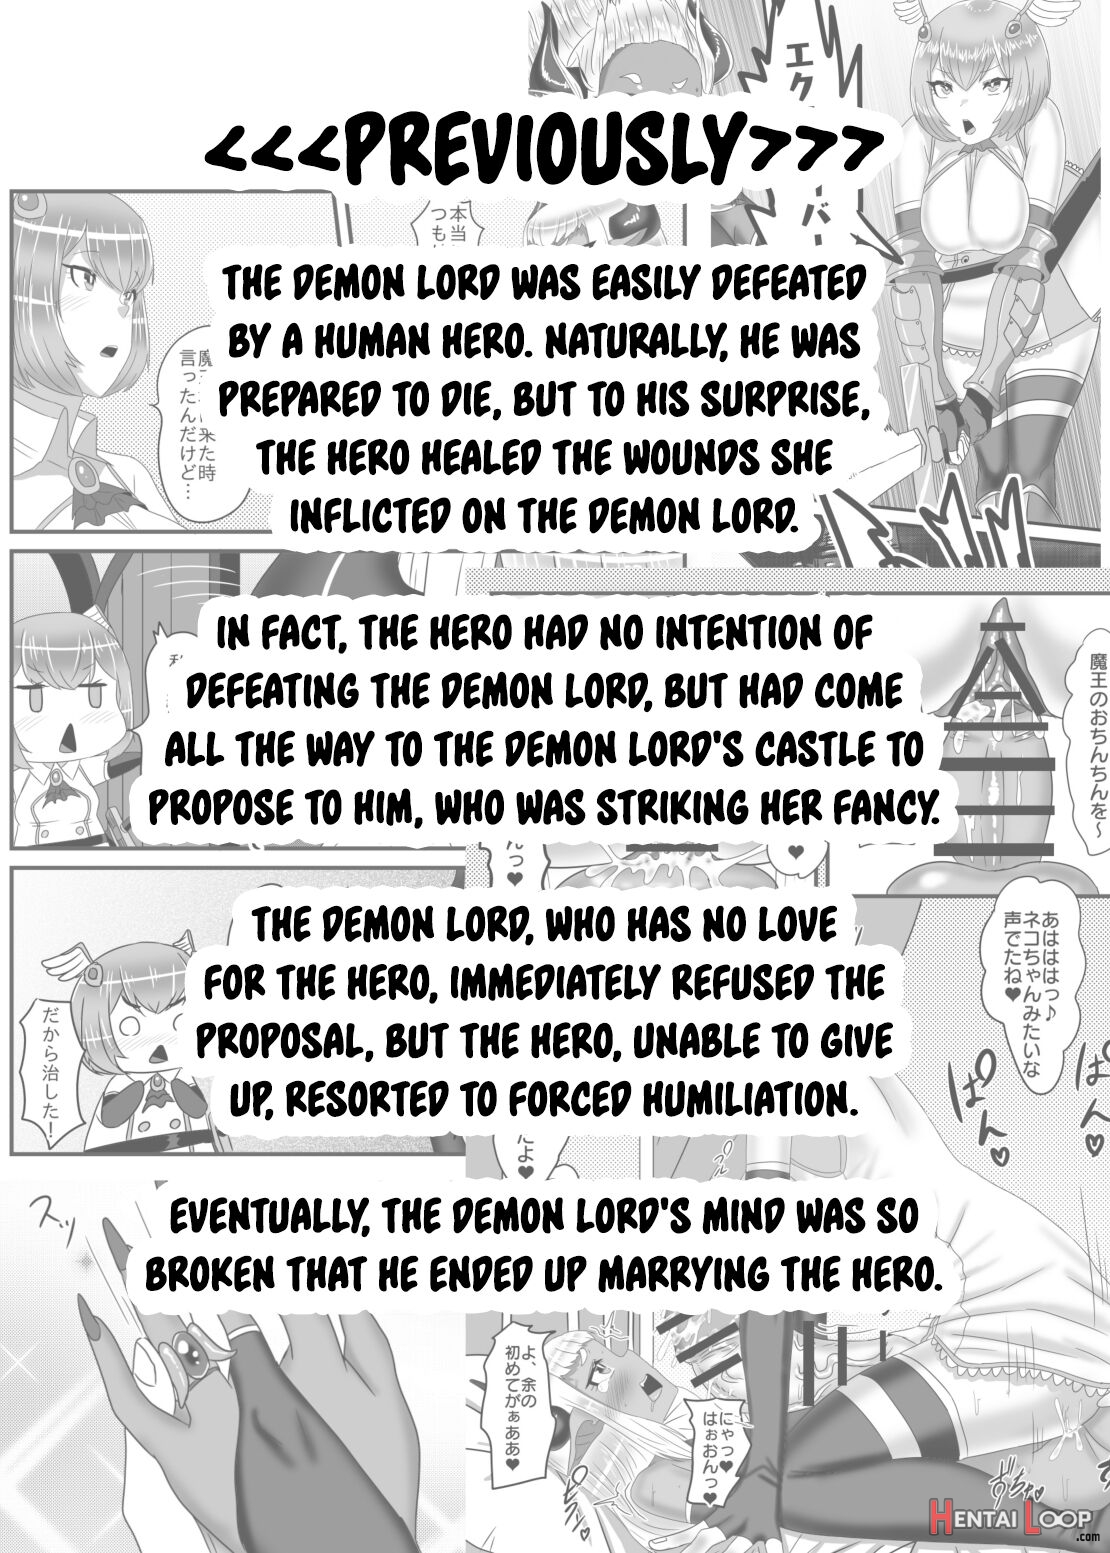 The Futanari Hero's Allurement Of The Demon Lord 2 page 5